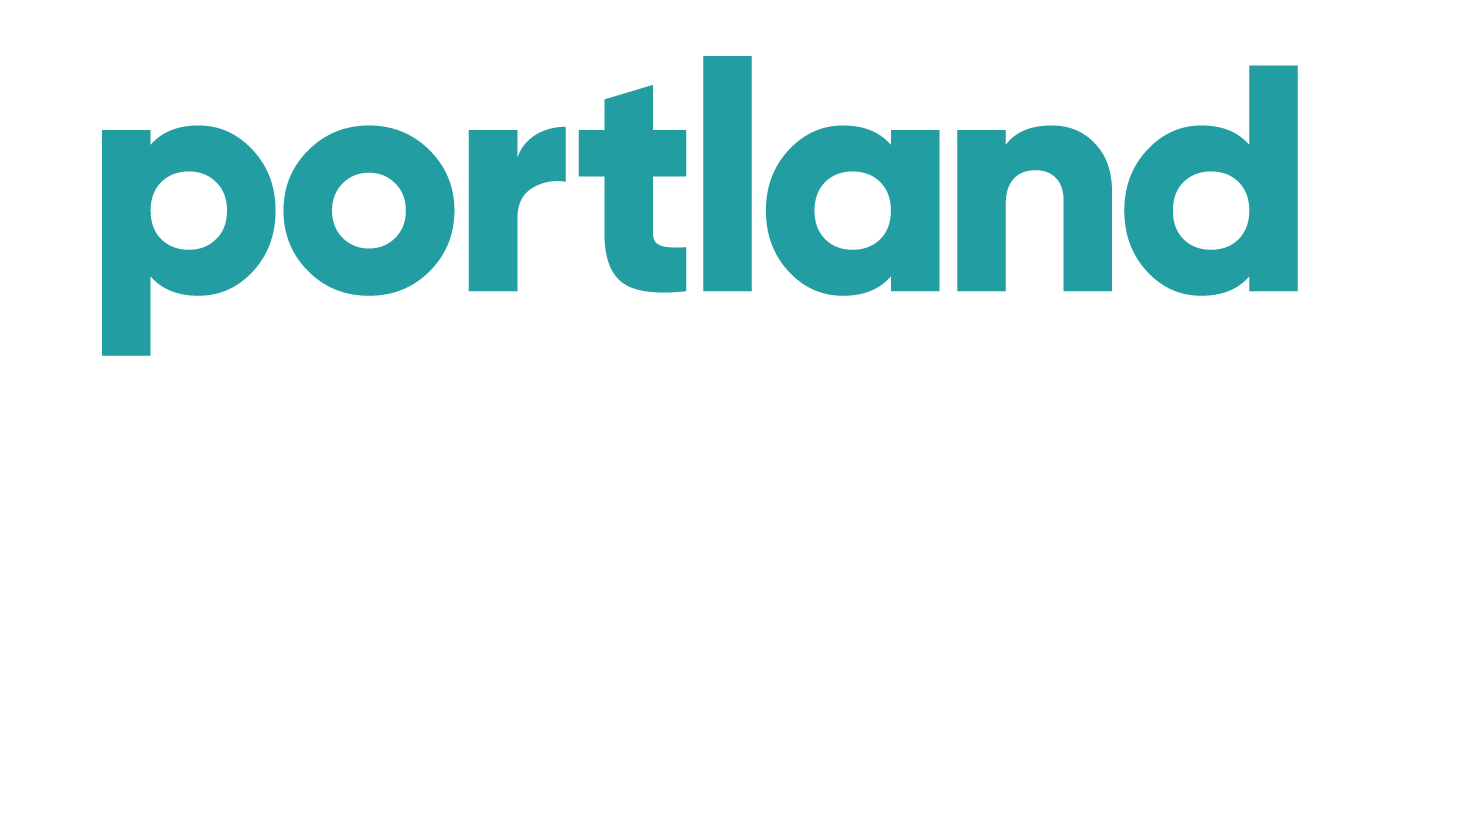 Portland Means Progress